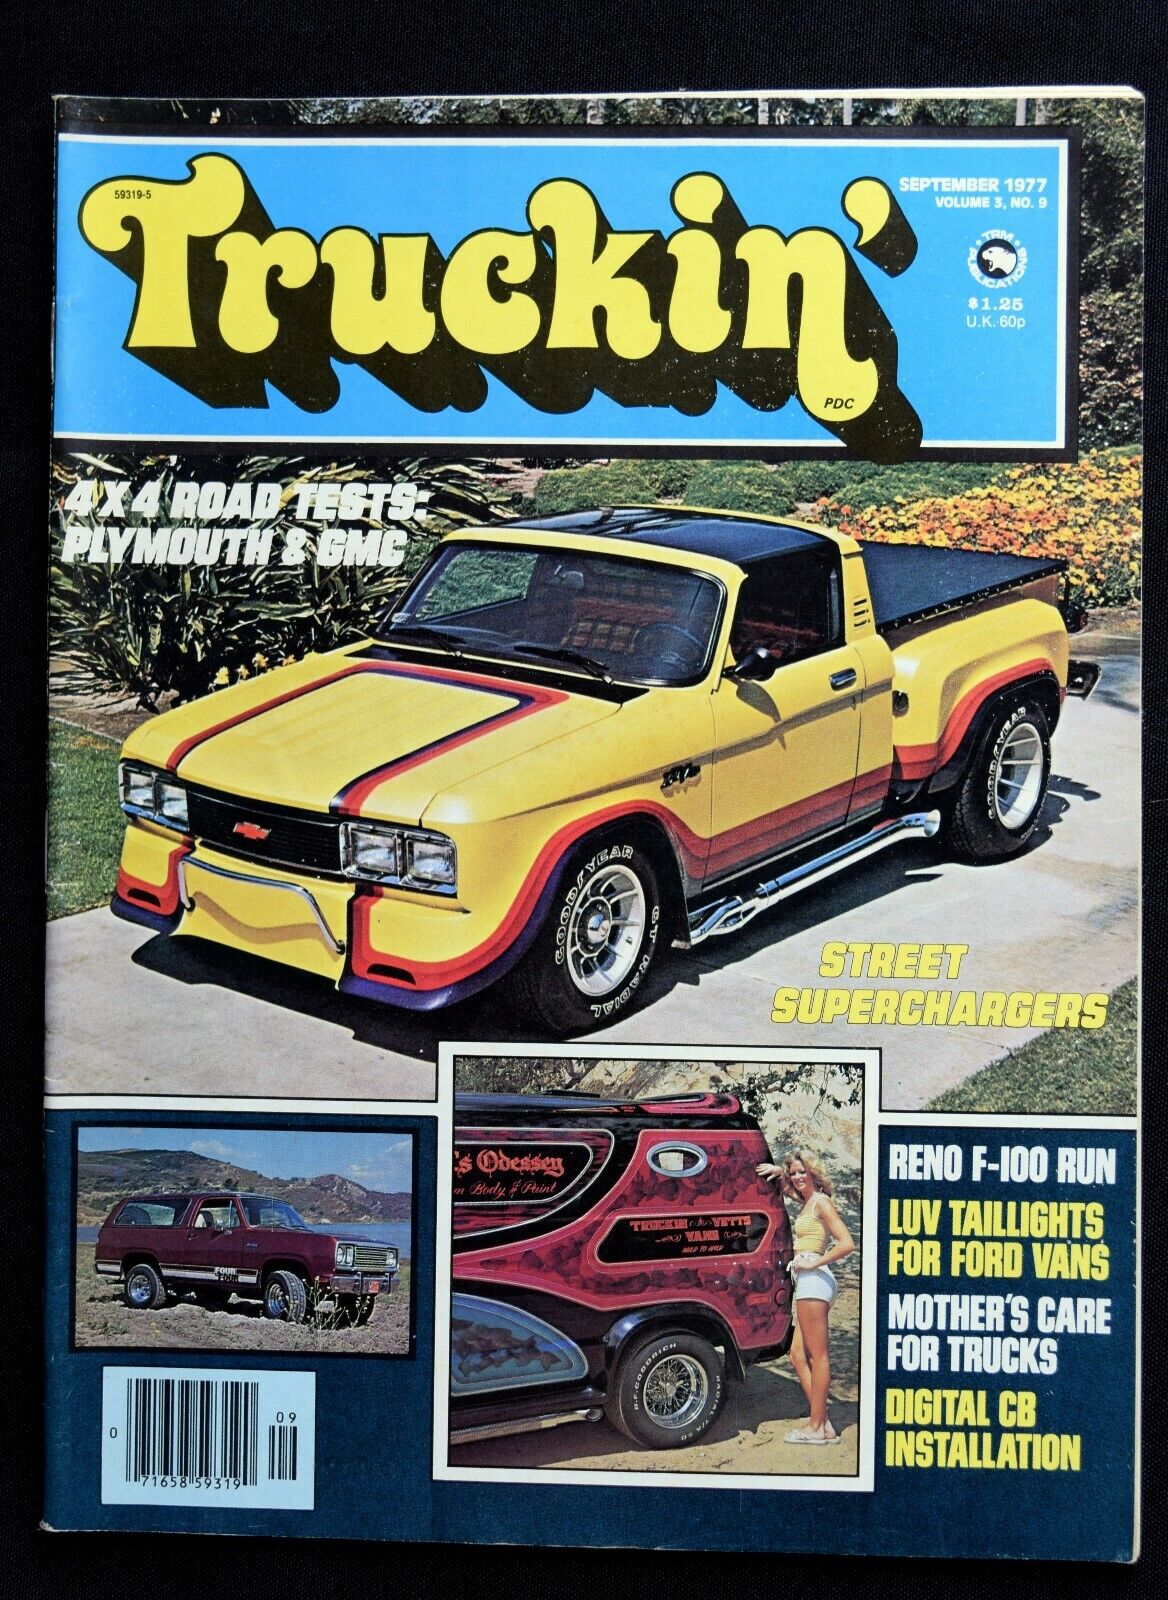 TRUCKIN' MAGAZINE - SEPTEMBER 1977 - 4x4 road tests: Plymouth & GMC